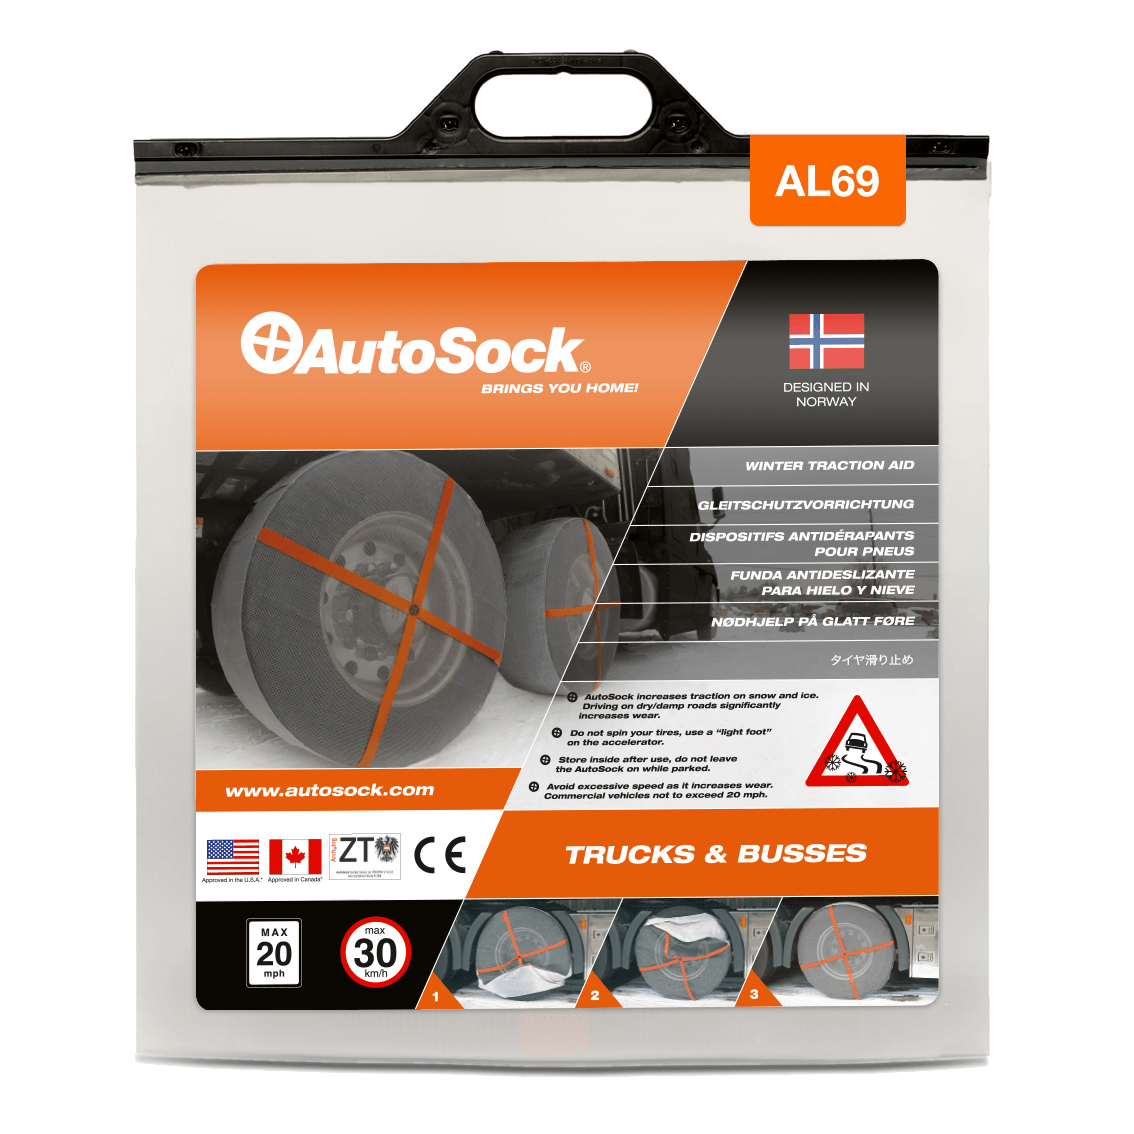 Embalaje del producto AutoSock AL 69 AL69 para camiones (vista frontal)